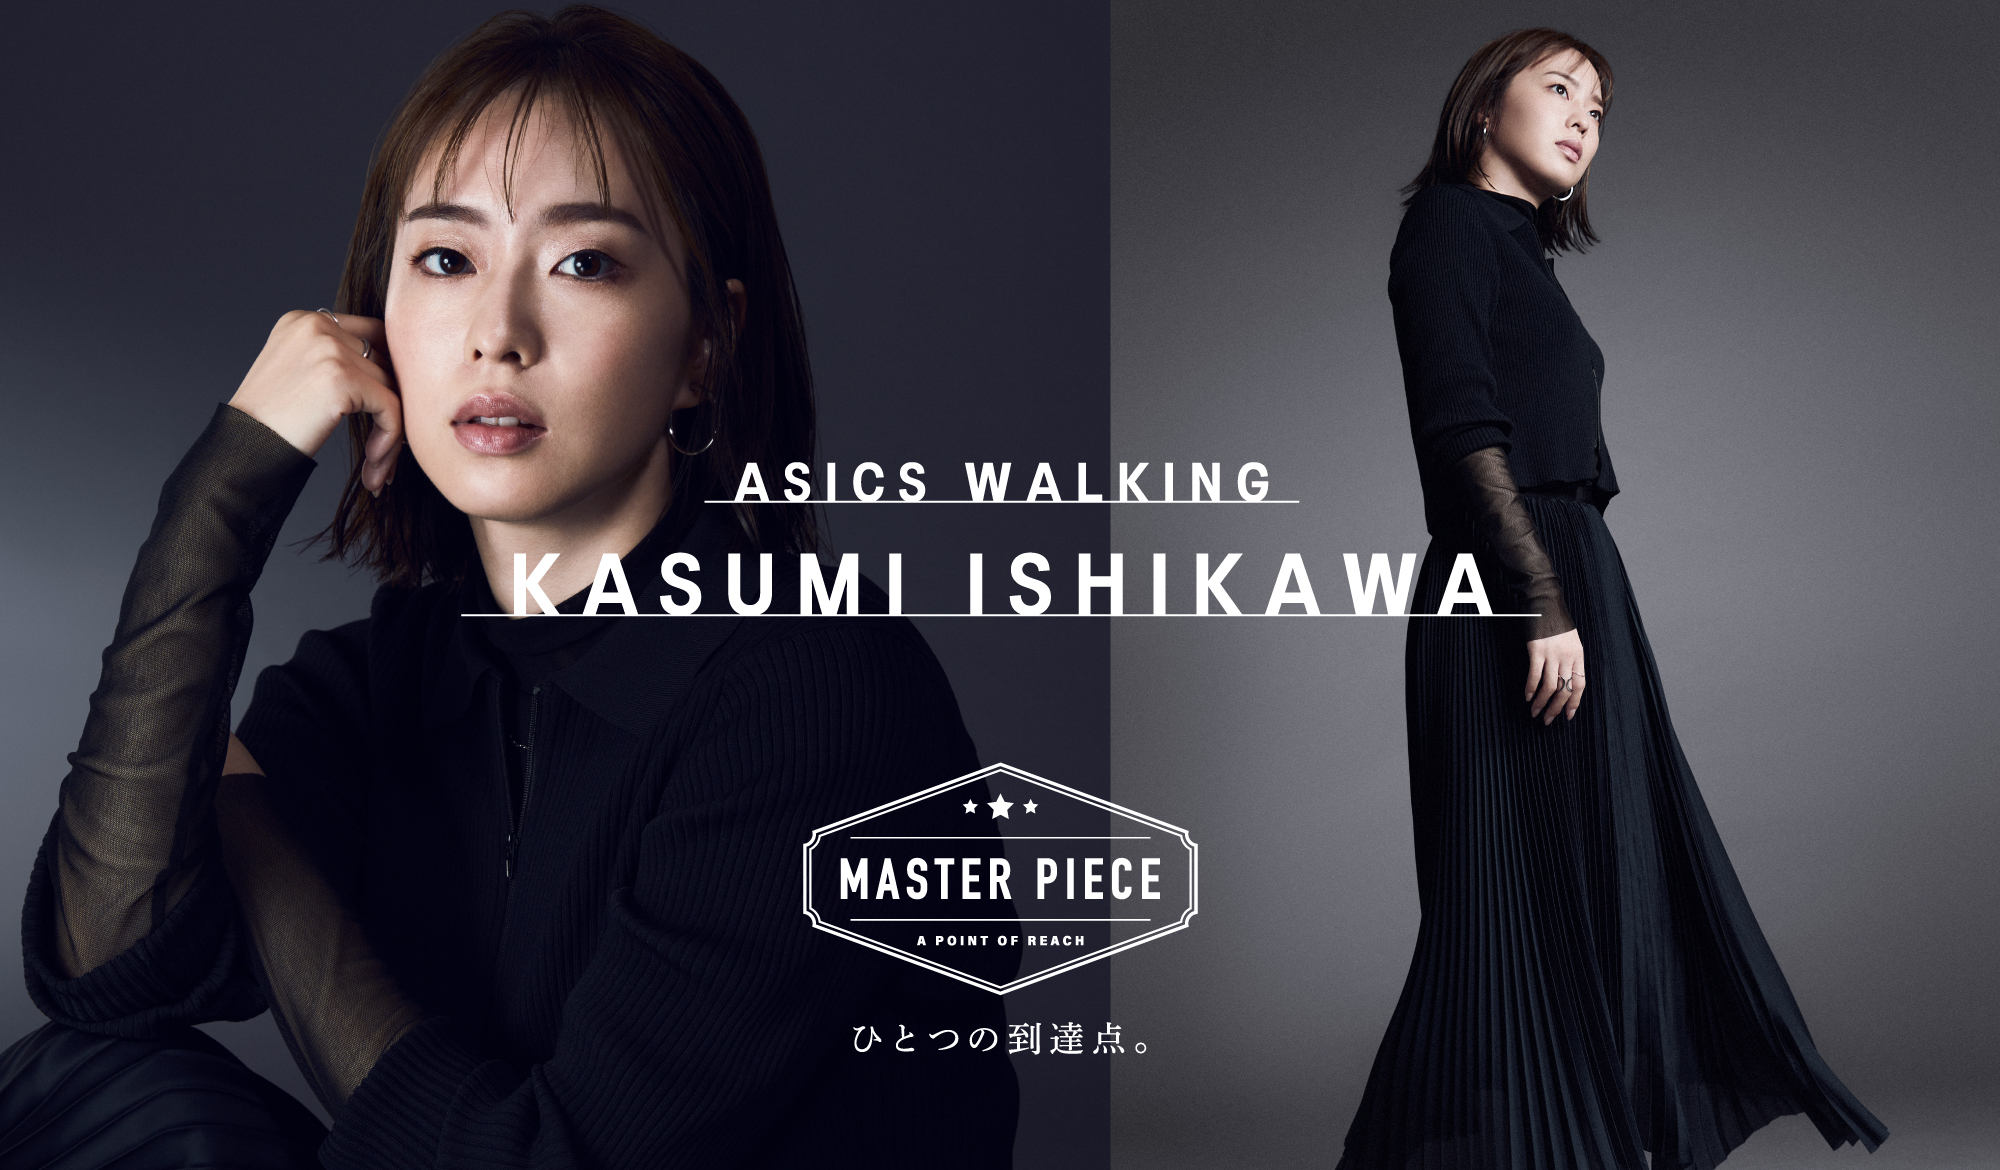 ASICS WALKING KASUMI ISHIKAWA